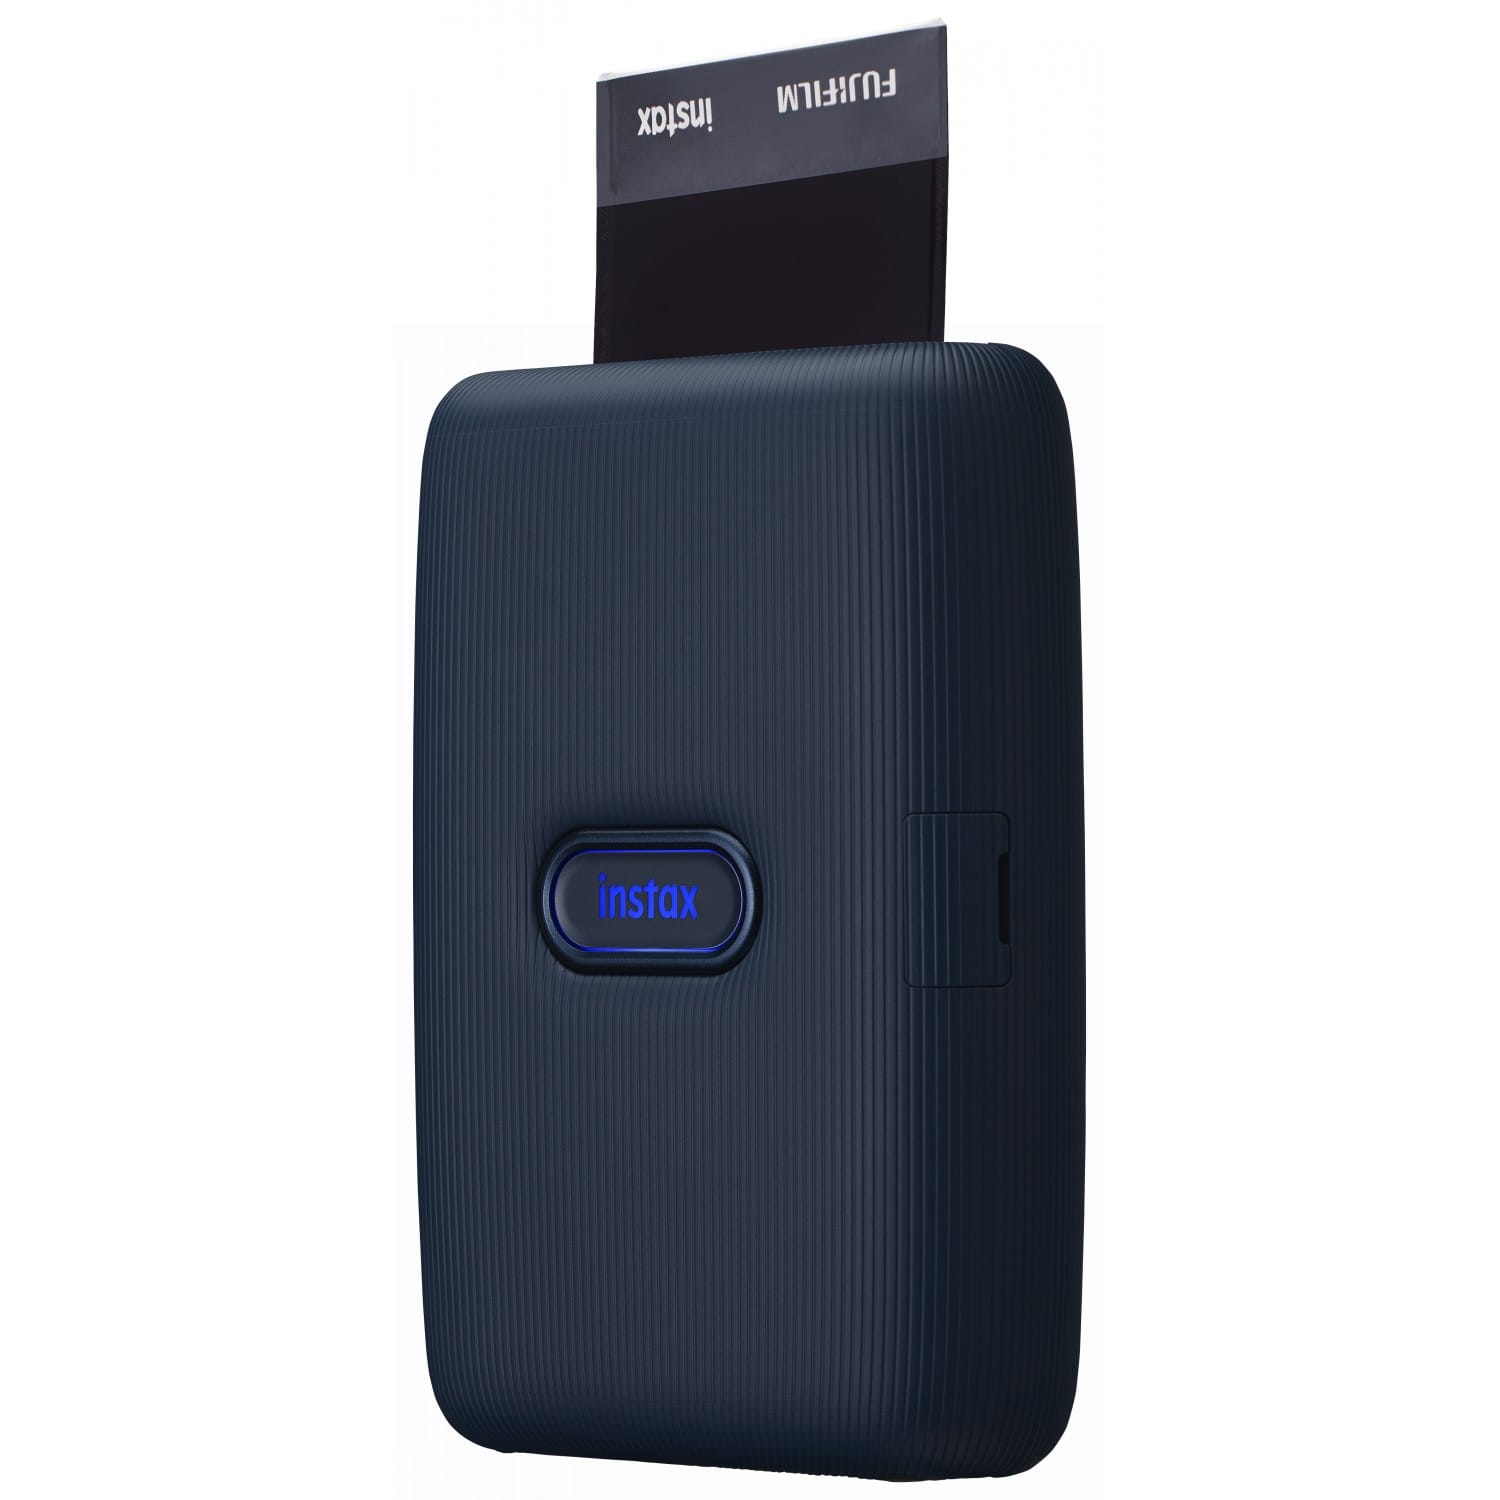 Imprimante photo portable FUJIFILM Instax Mini Link 2 Space Blue -  Imprimante photo - Achat moins cher